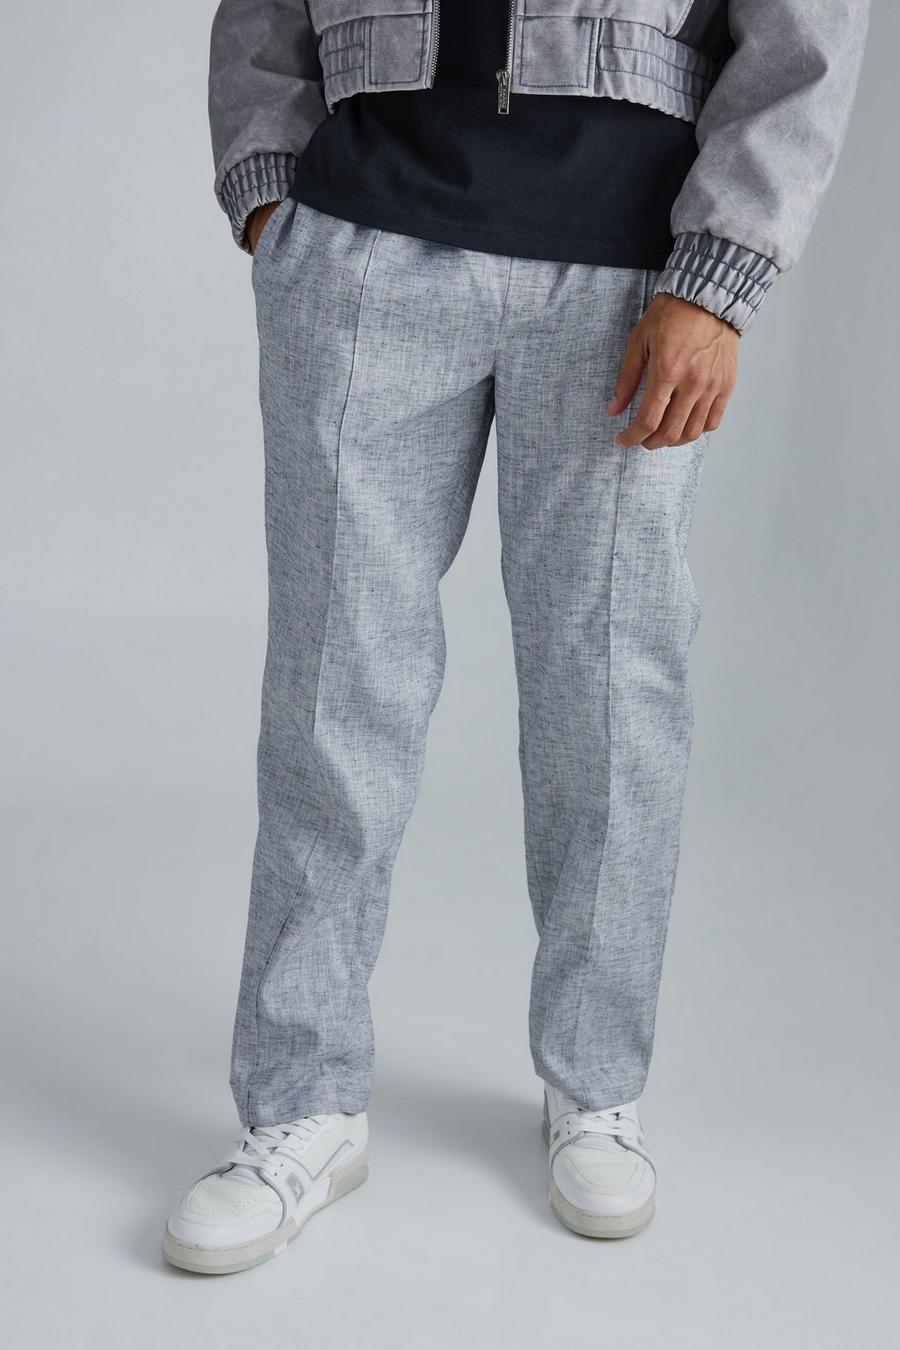 https://media.boohoo.com/i/boohoo/bmm62789_grey_xl/male-grey-elasticated-waistband-straight-leg-trouser/?w=900&qlt=default&fmt.jp2.qlt=70&fmt=auto&sm=fit